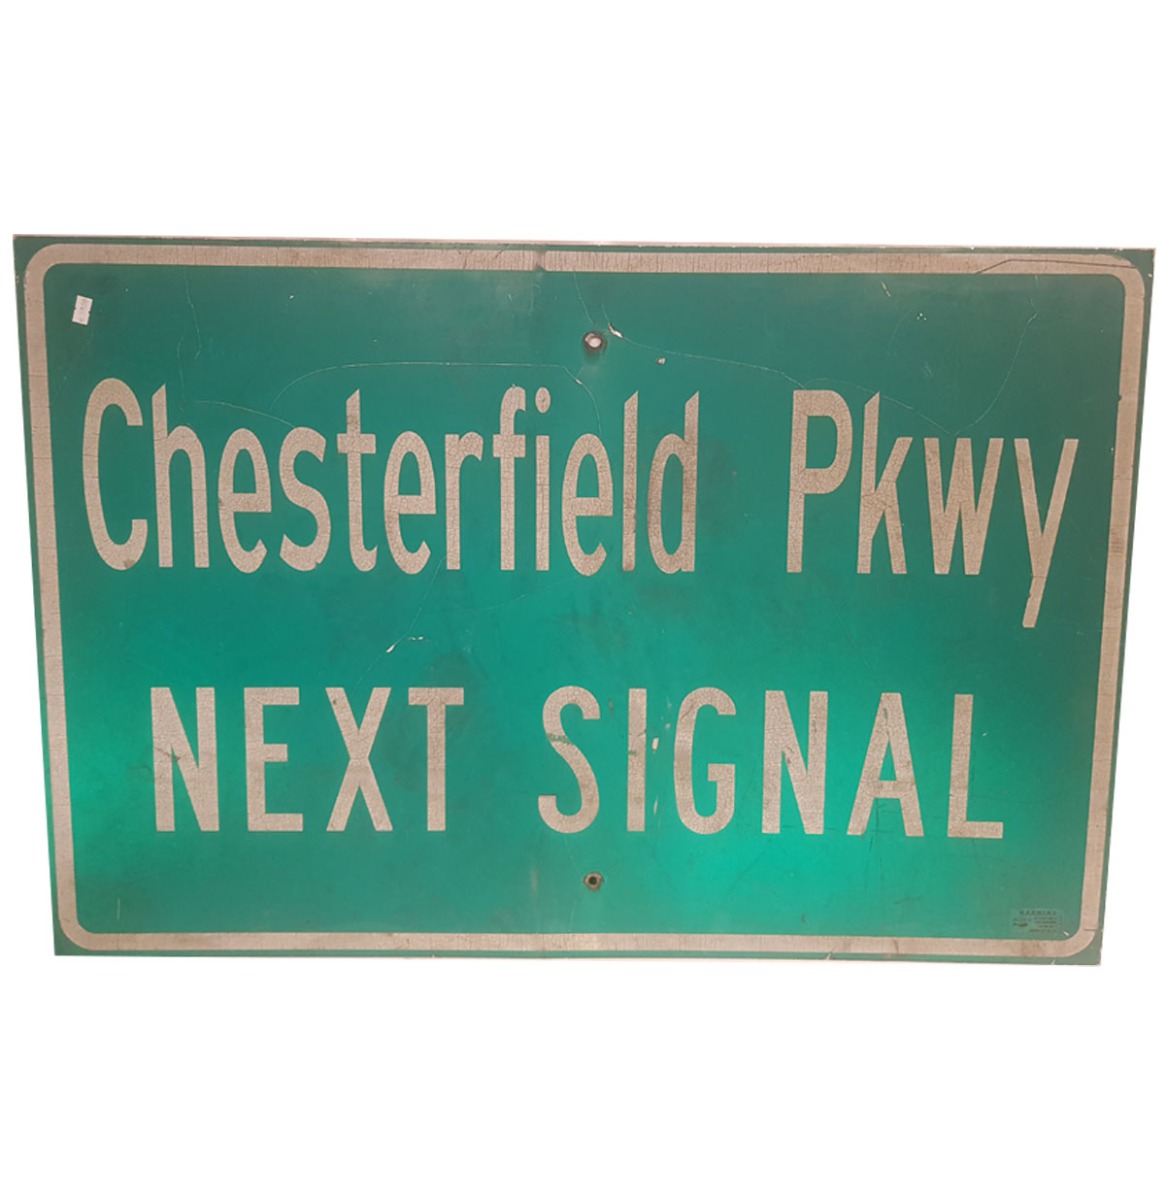 Chesterfield Pkwy Next Signal Straatbord - Origineel